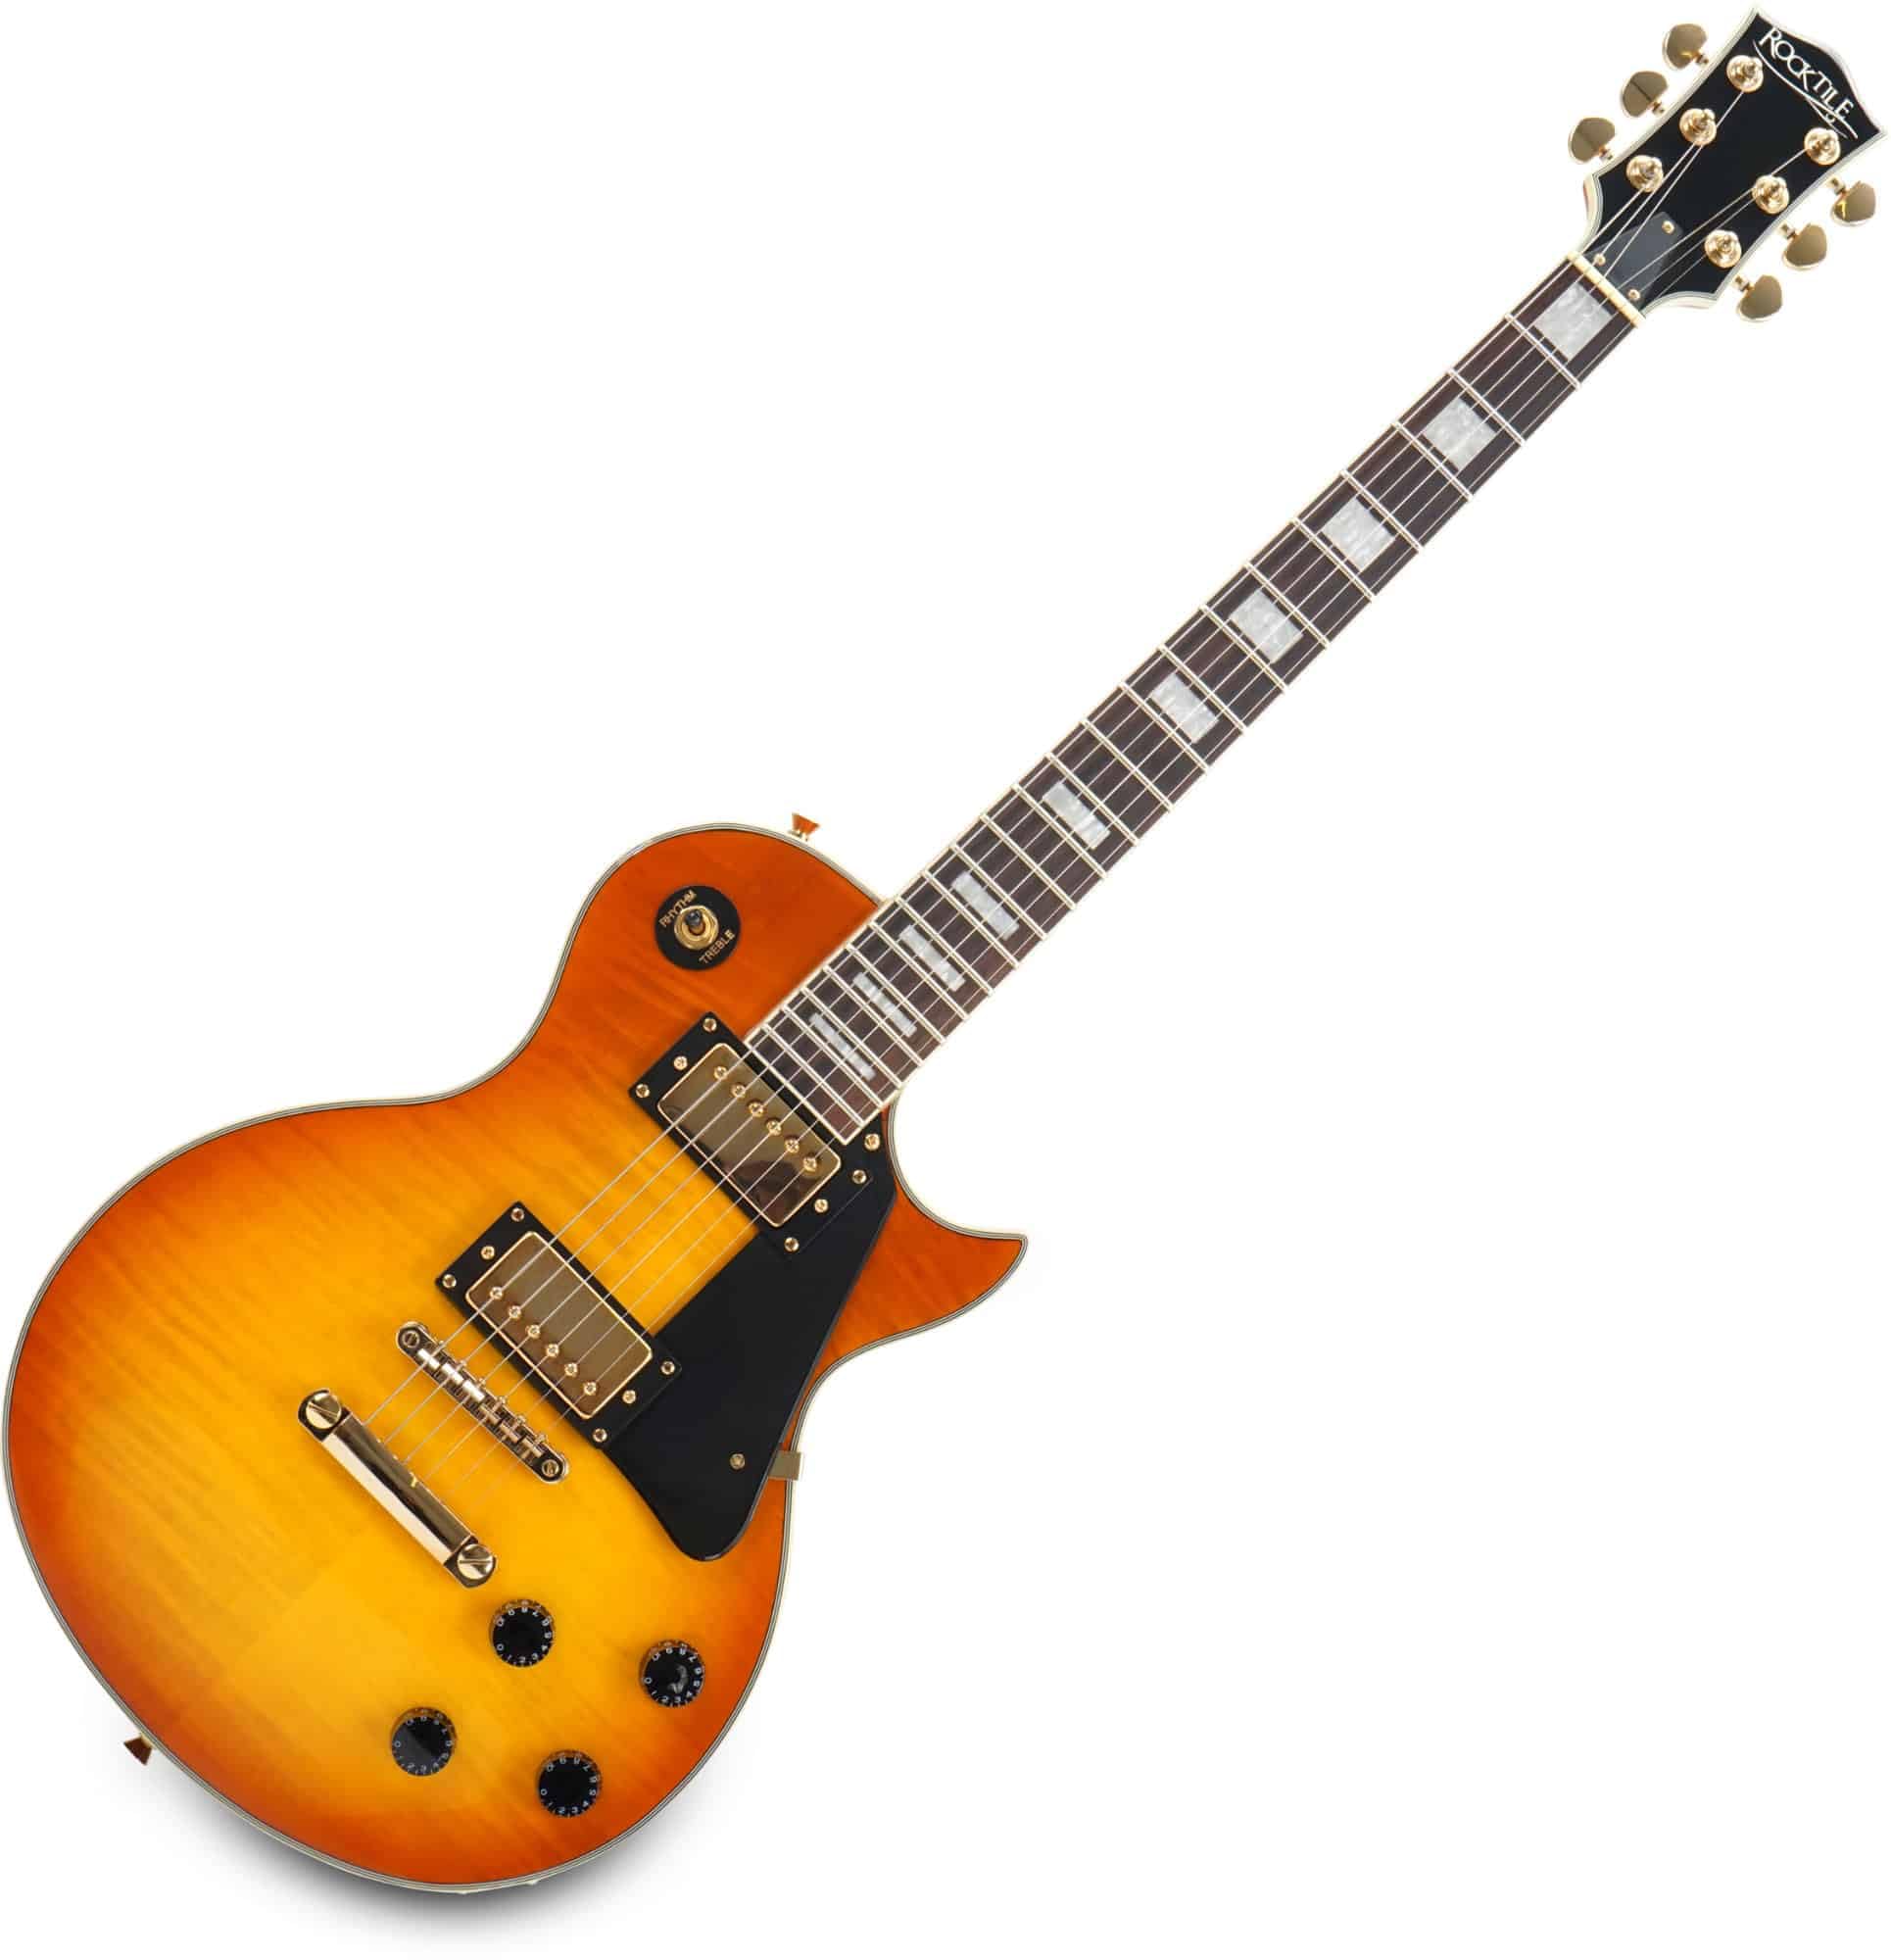 Rocktile Pro L-200OHB E-Gitarre - Korpus: Mahagoni - 2 Humbucker Tonabnehmer - geleimter Ahorn-Hals - Palisander Griffbrett - Tune-O-matic Bridge und Stop Bar Tailpiece - Orange Honey Burst